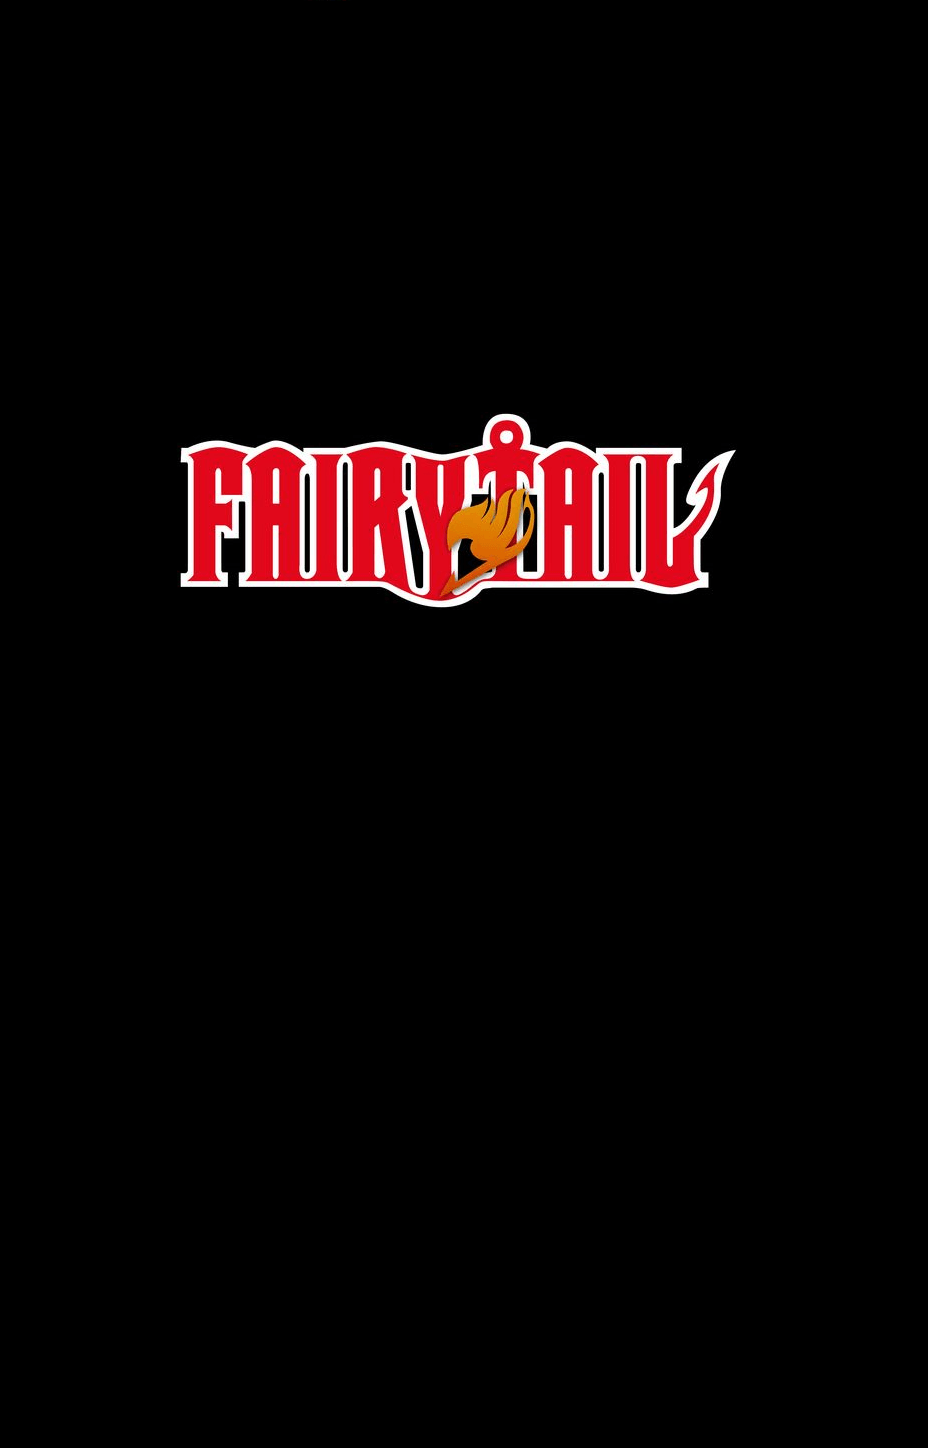 Fairy Tail wallpaper. Just Otaku ;-) :-)) 0.0 >.< =_=. Watashi wa